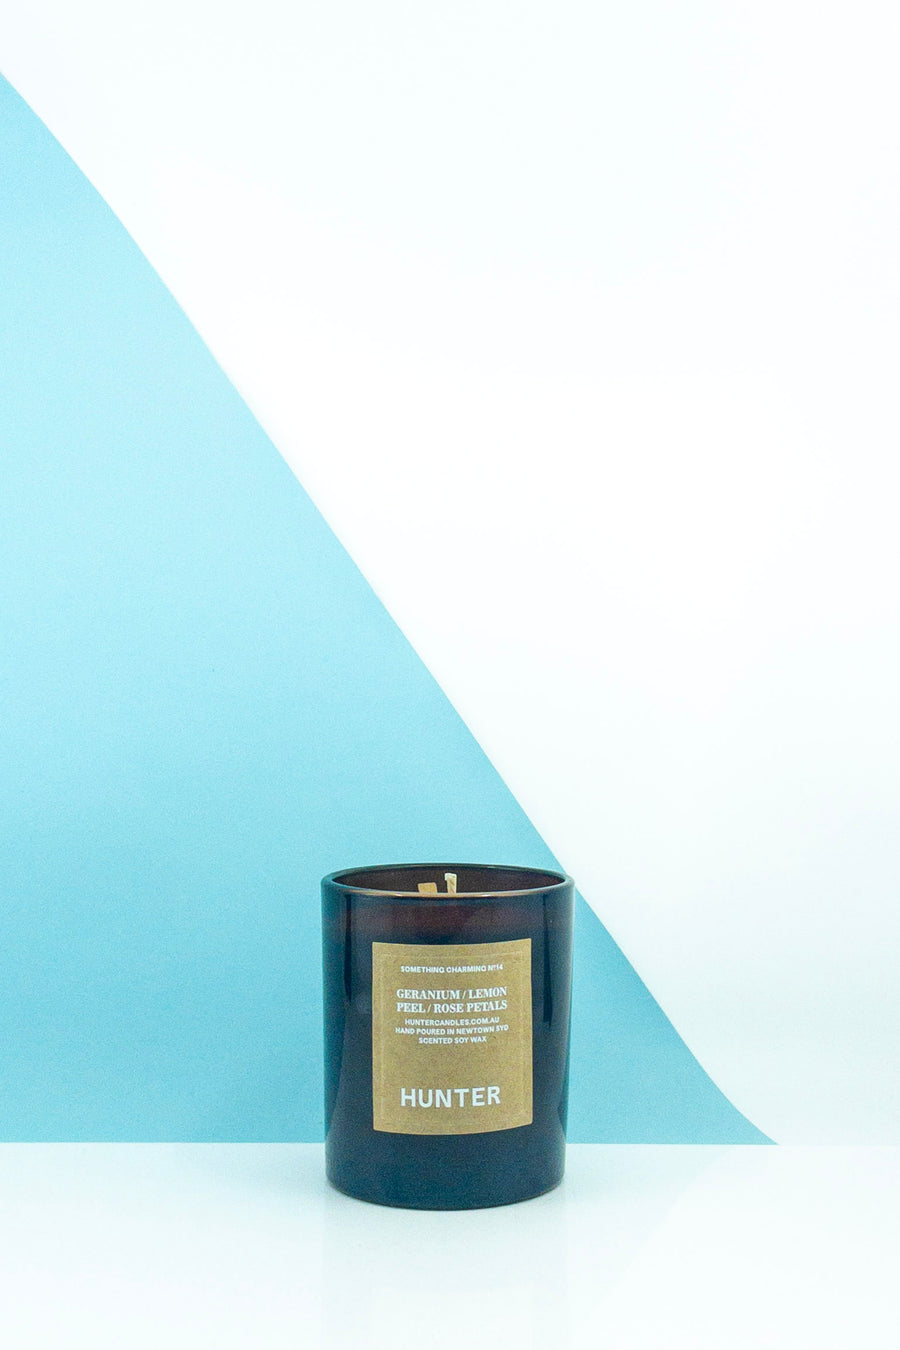 Hunter Candles Something Charming - Geranium + Lemon Peel + Rose Petals